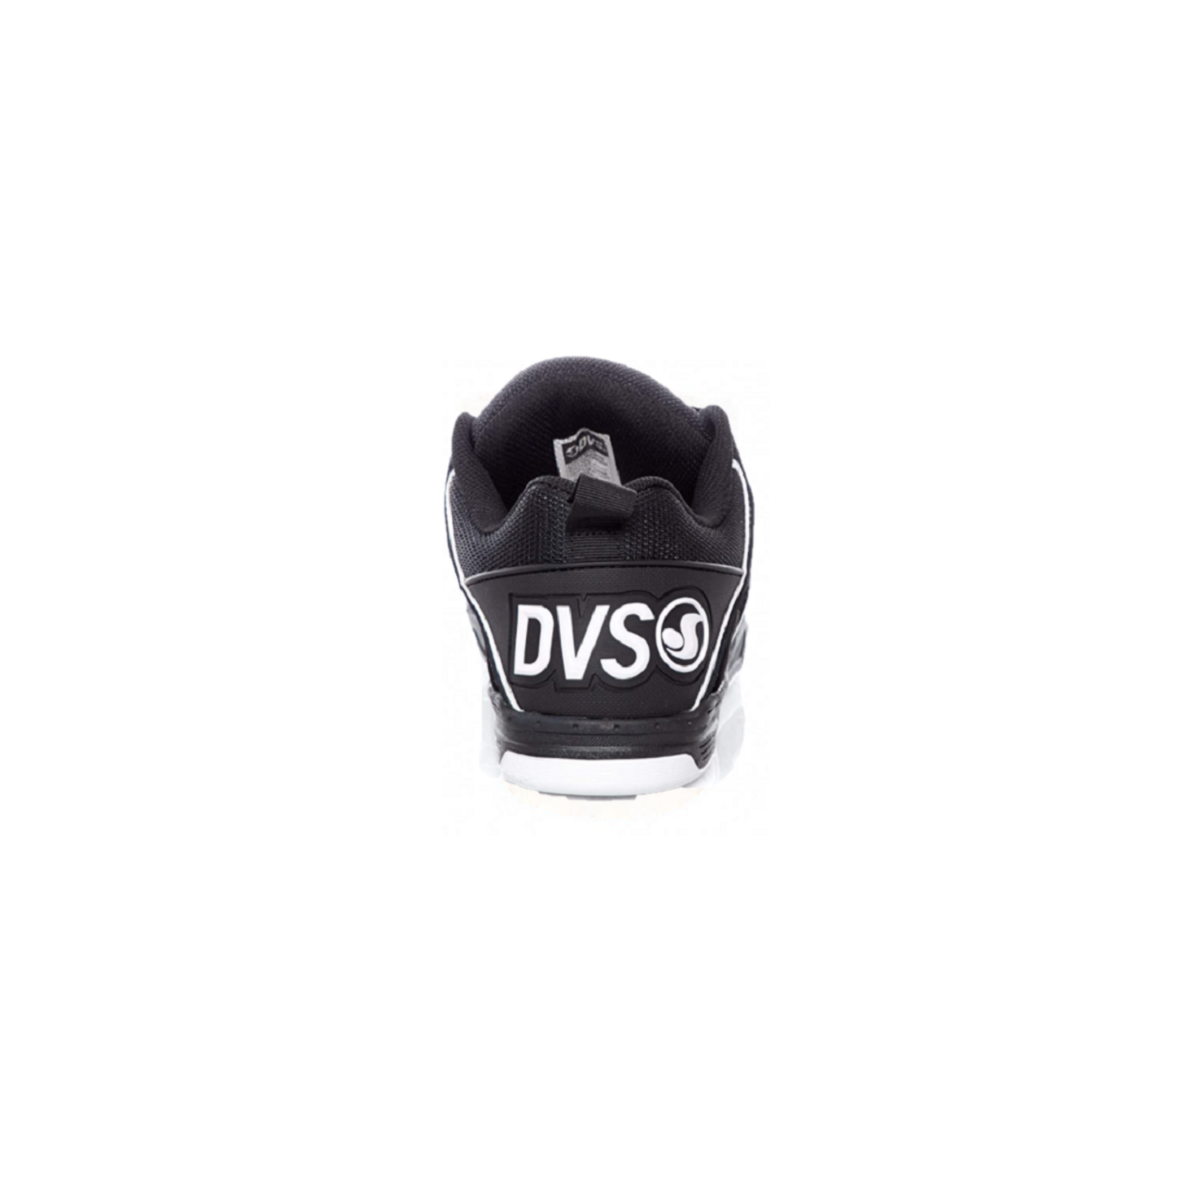 DVS F0000029972 COMANCHE MN'S (Medium) Black/White Leather & Nubuck Skate Shoes